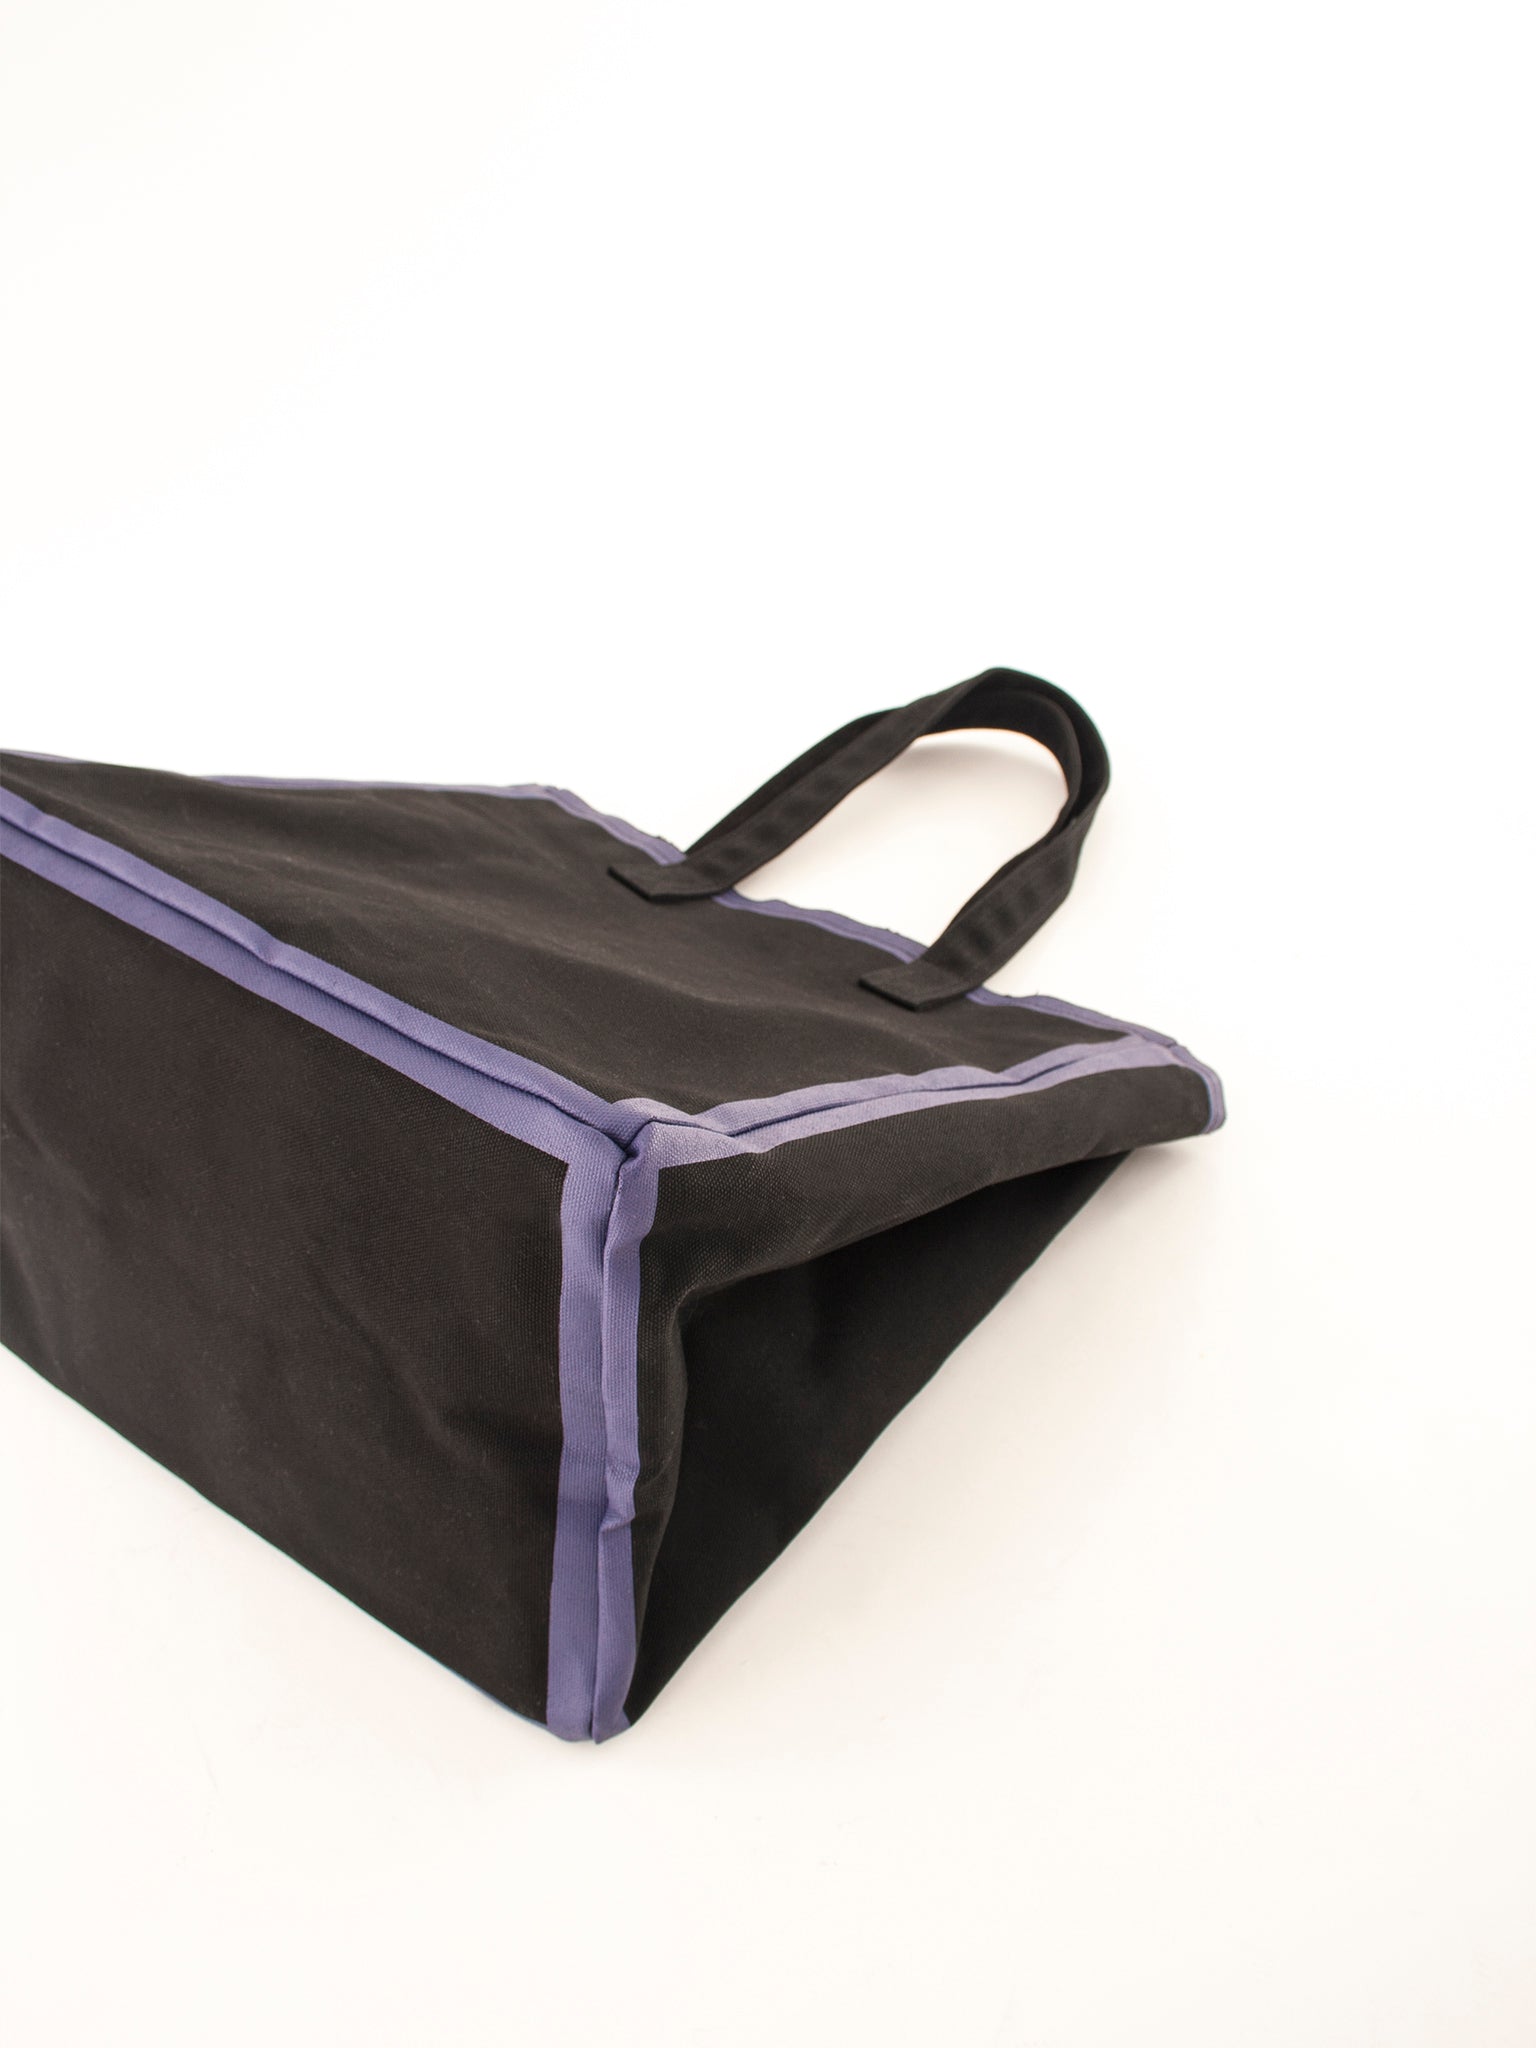 Canvas tote bag, black & purple